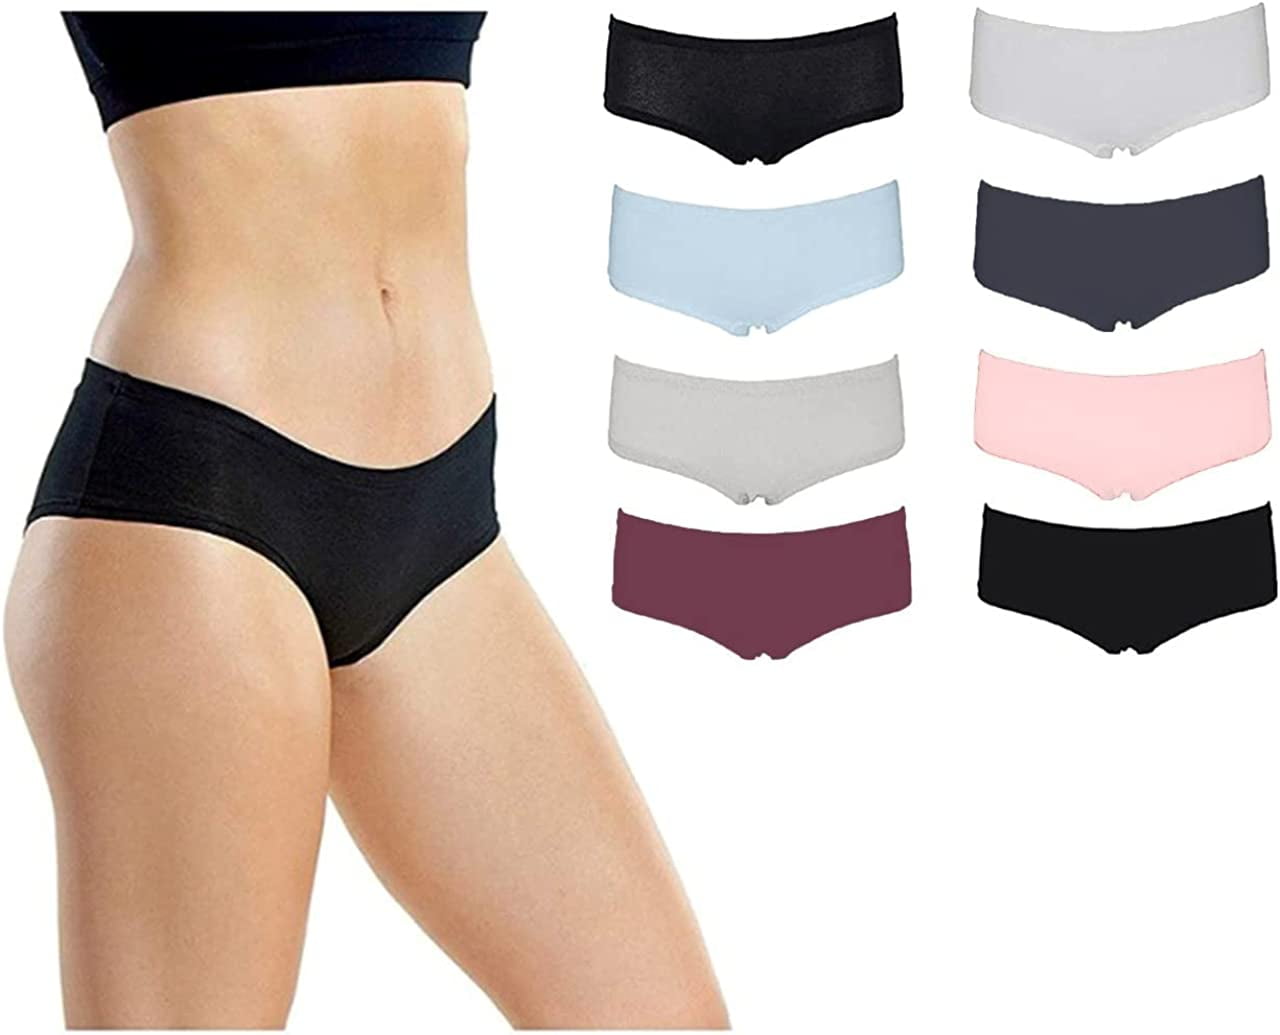 Cotton Underwear For Women Bikini Panty Soft Full Back Coverage Briefs 4  Pack